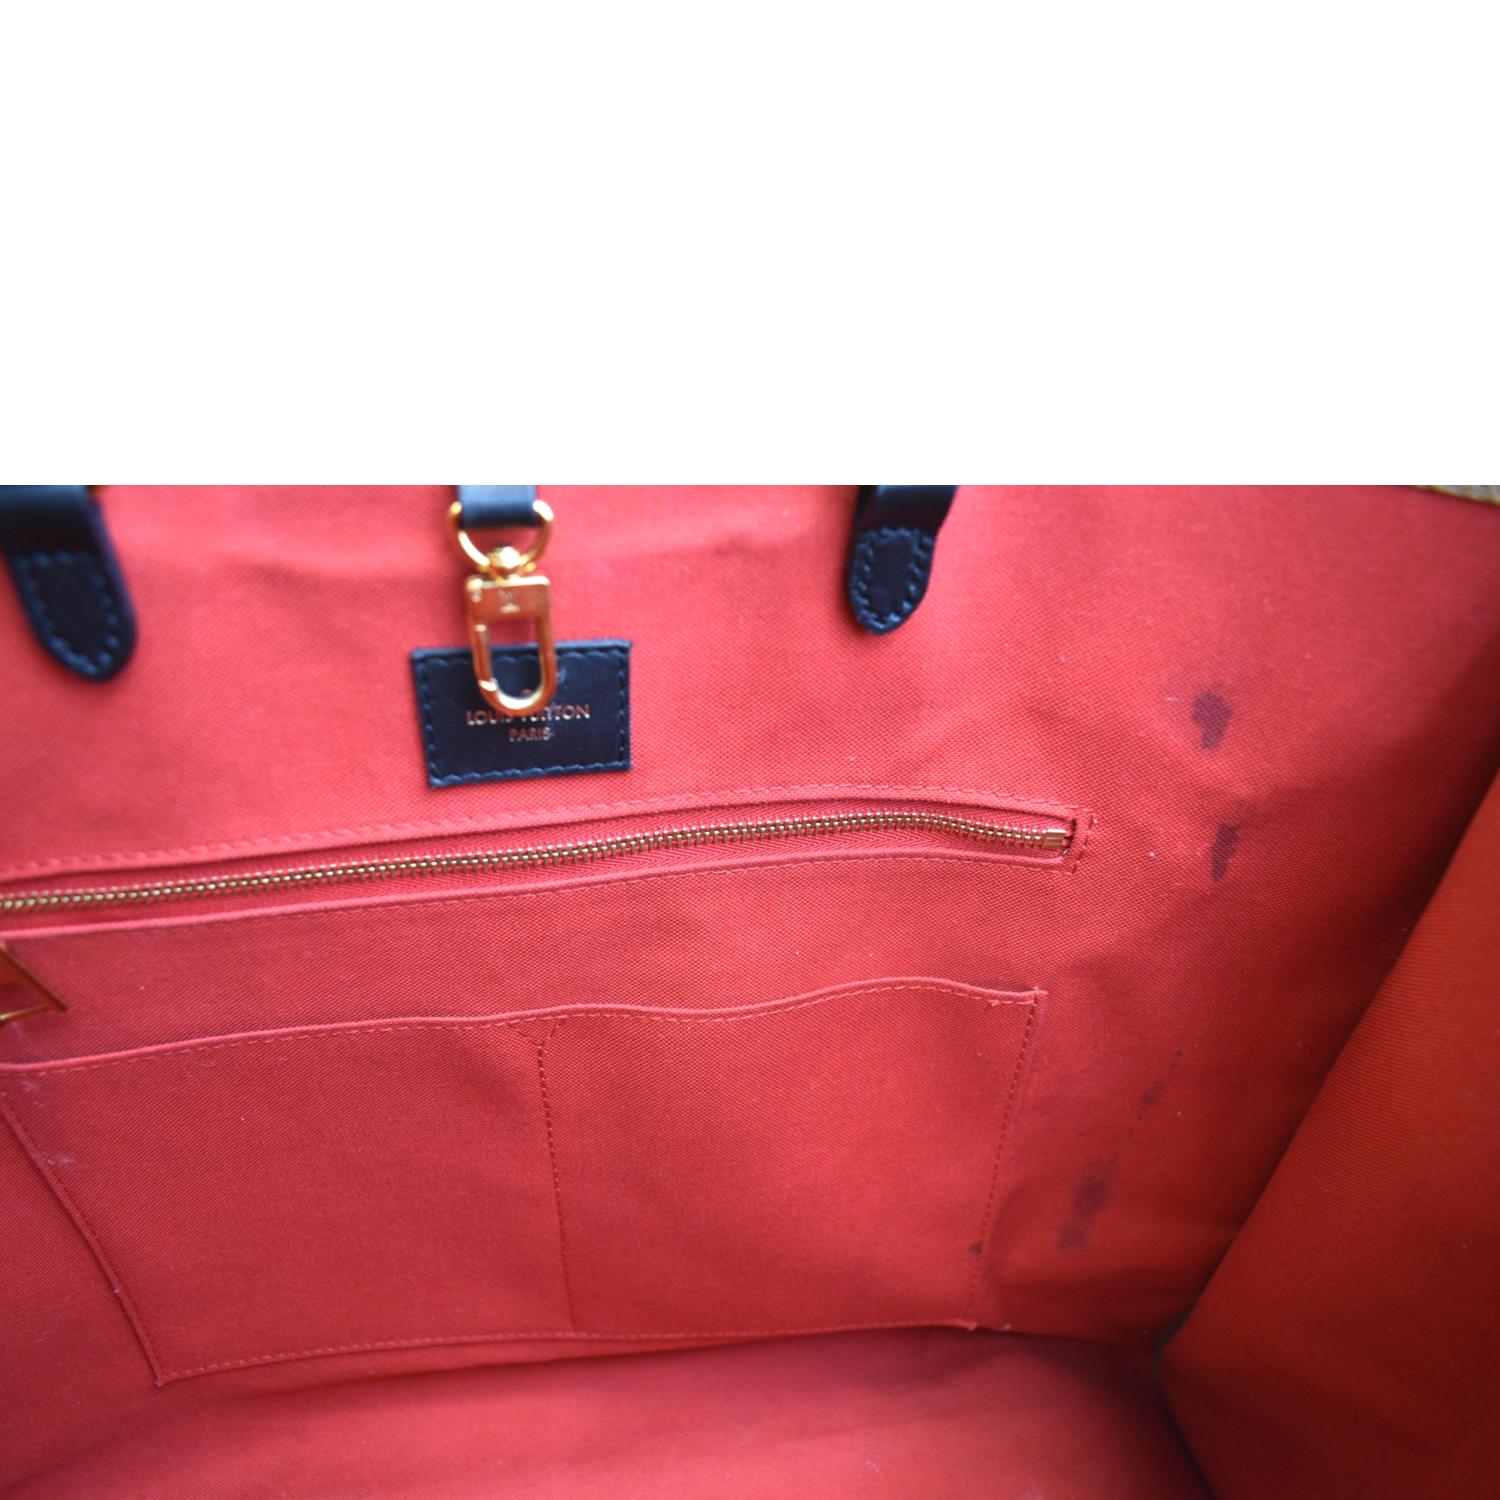 Onthego cloth handbag Louis Vuitton Brown in Cloth - 27888091